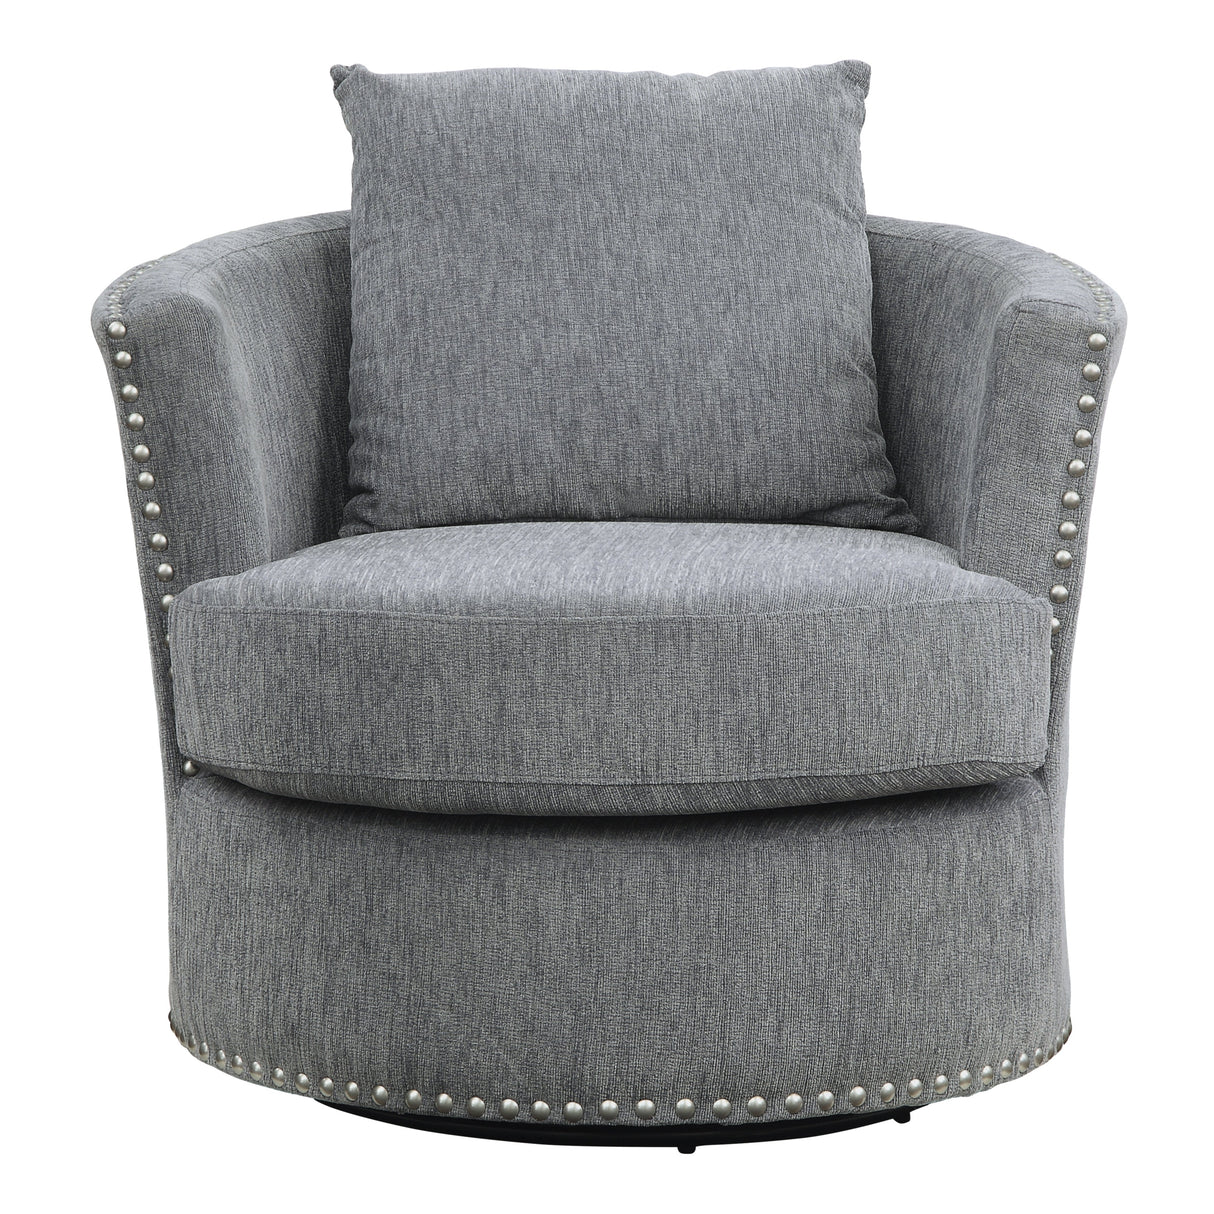 Morelia Dark Gray Swivel Chair